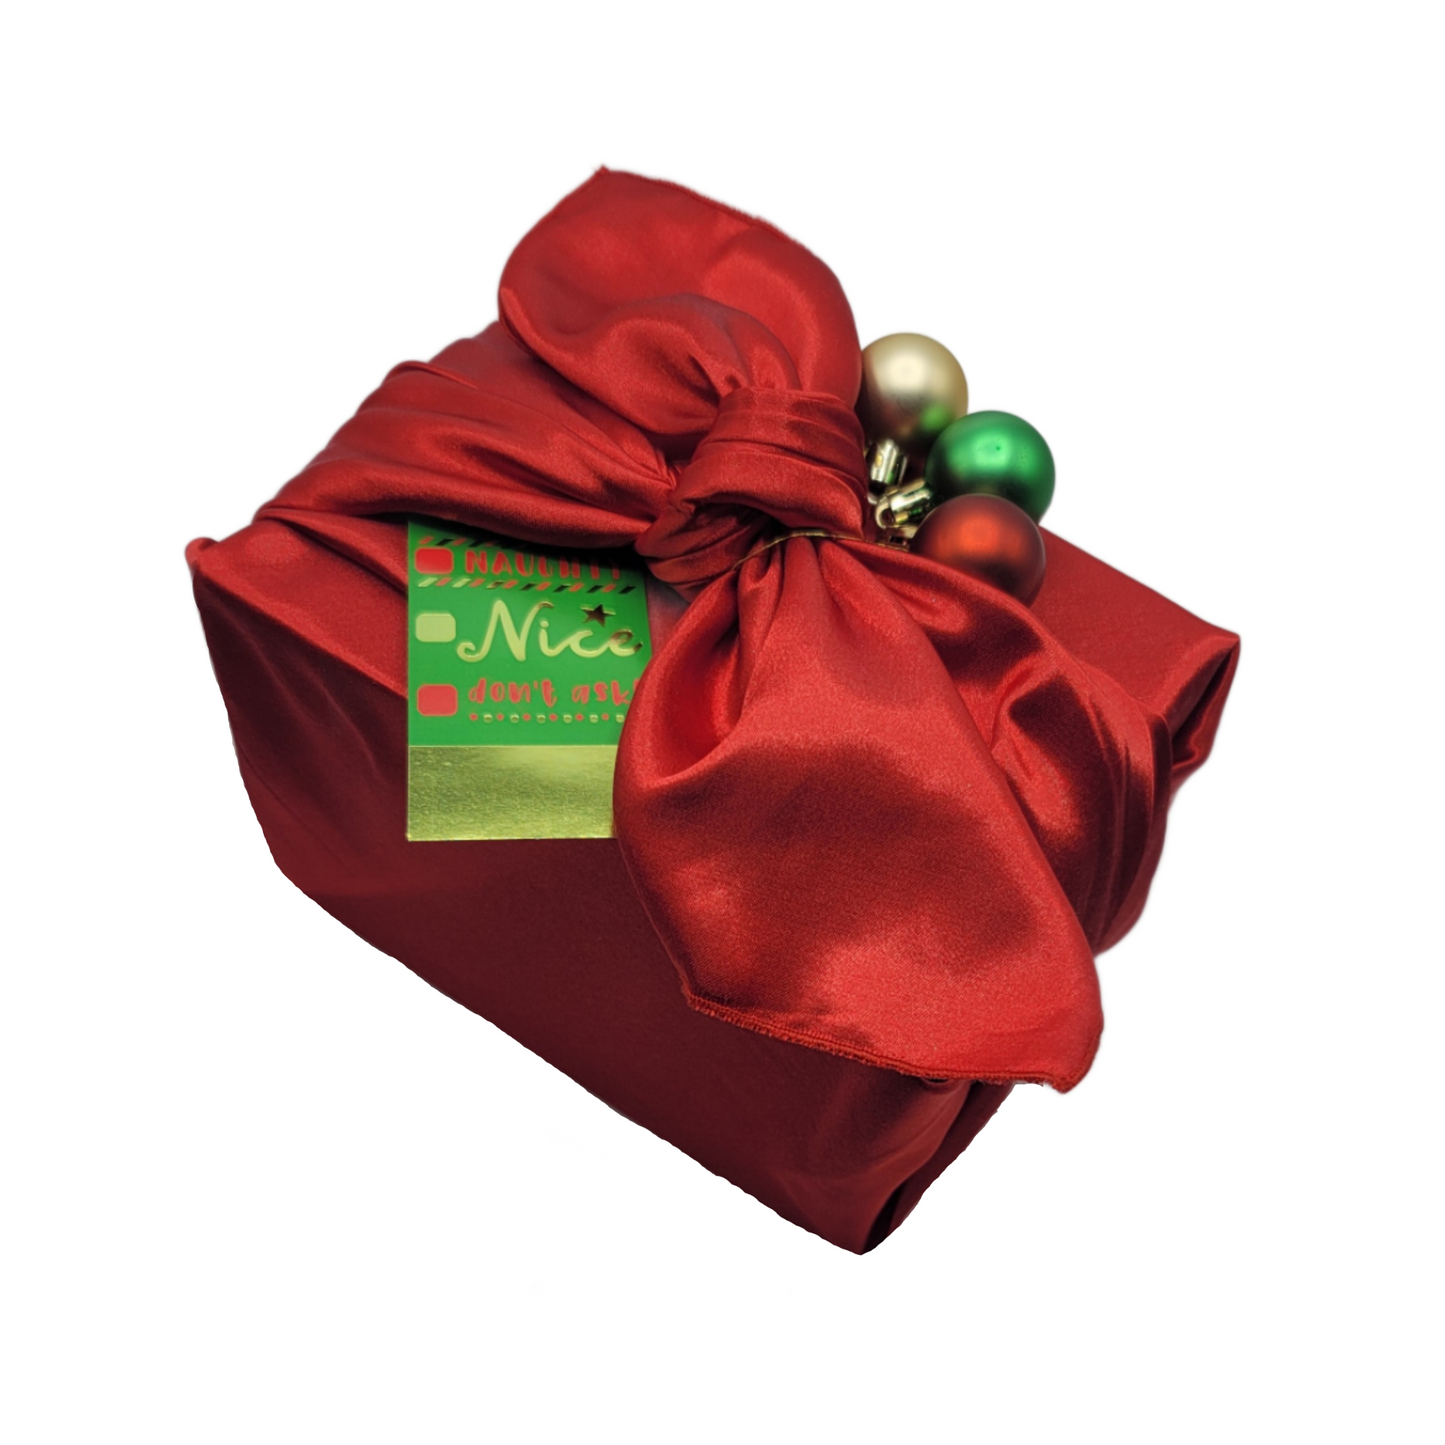 Furoshiki 3 pc Fabric Gift Wrap Kit - Holiday/Red Satin